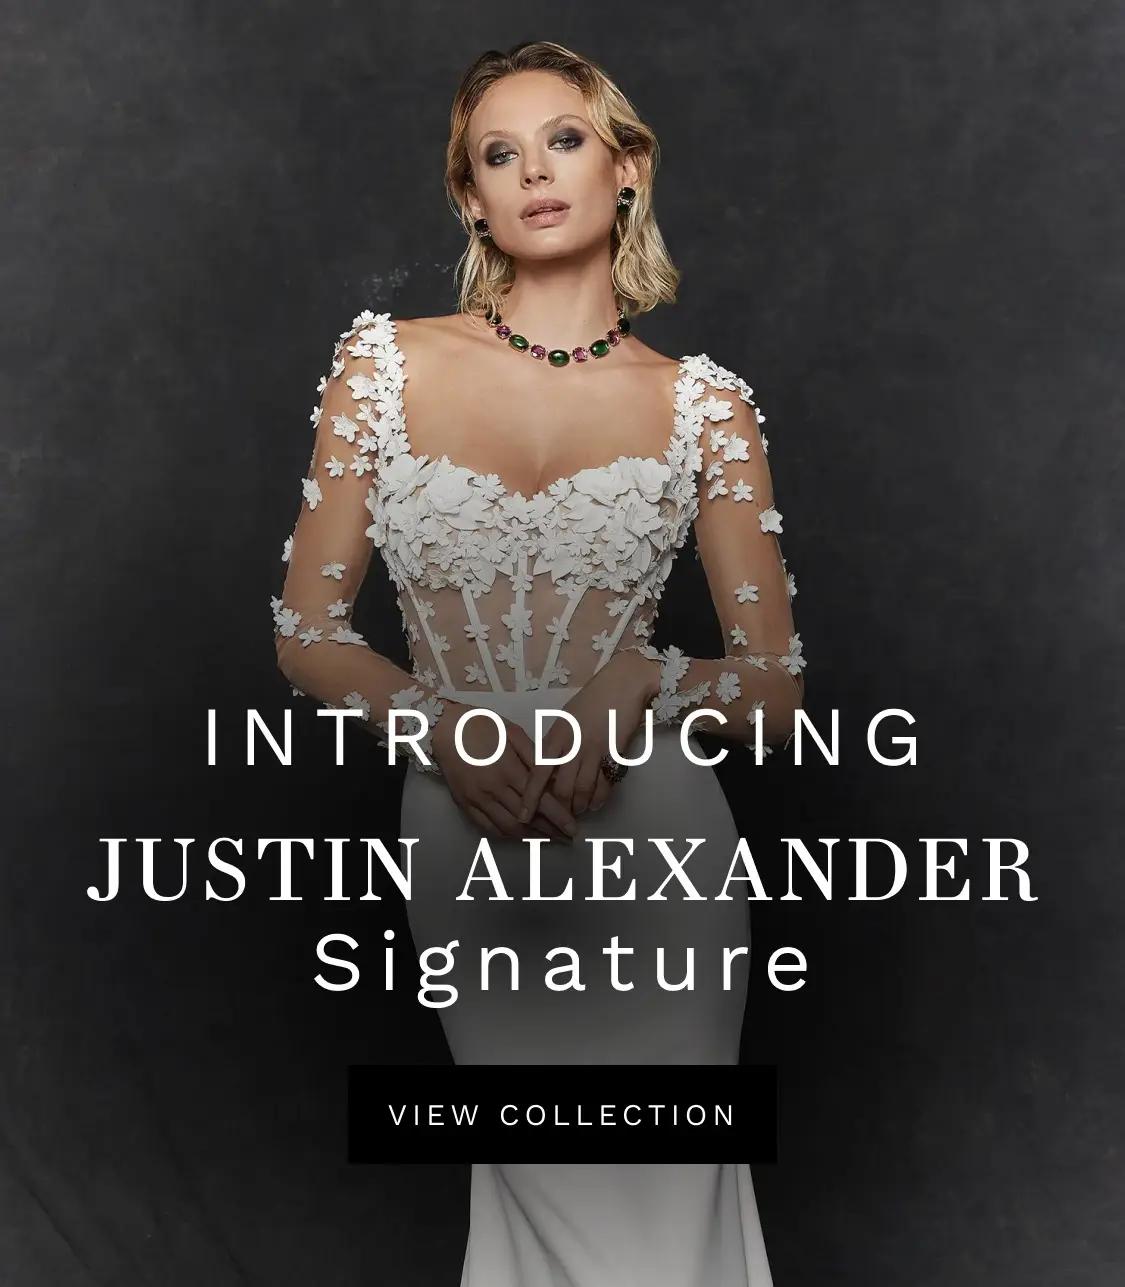 "Justin Alexander Signature" banner for mobile